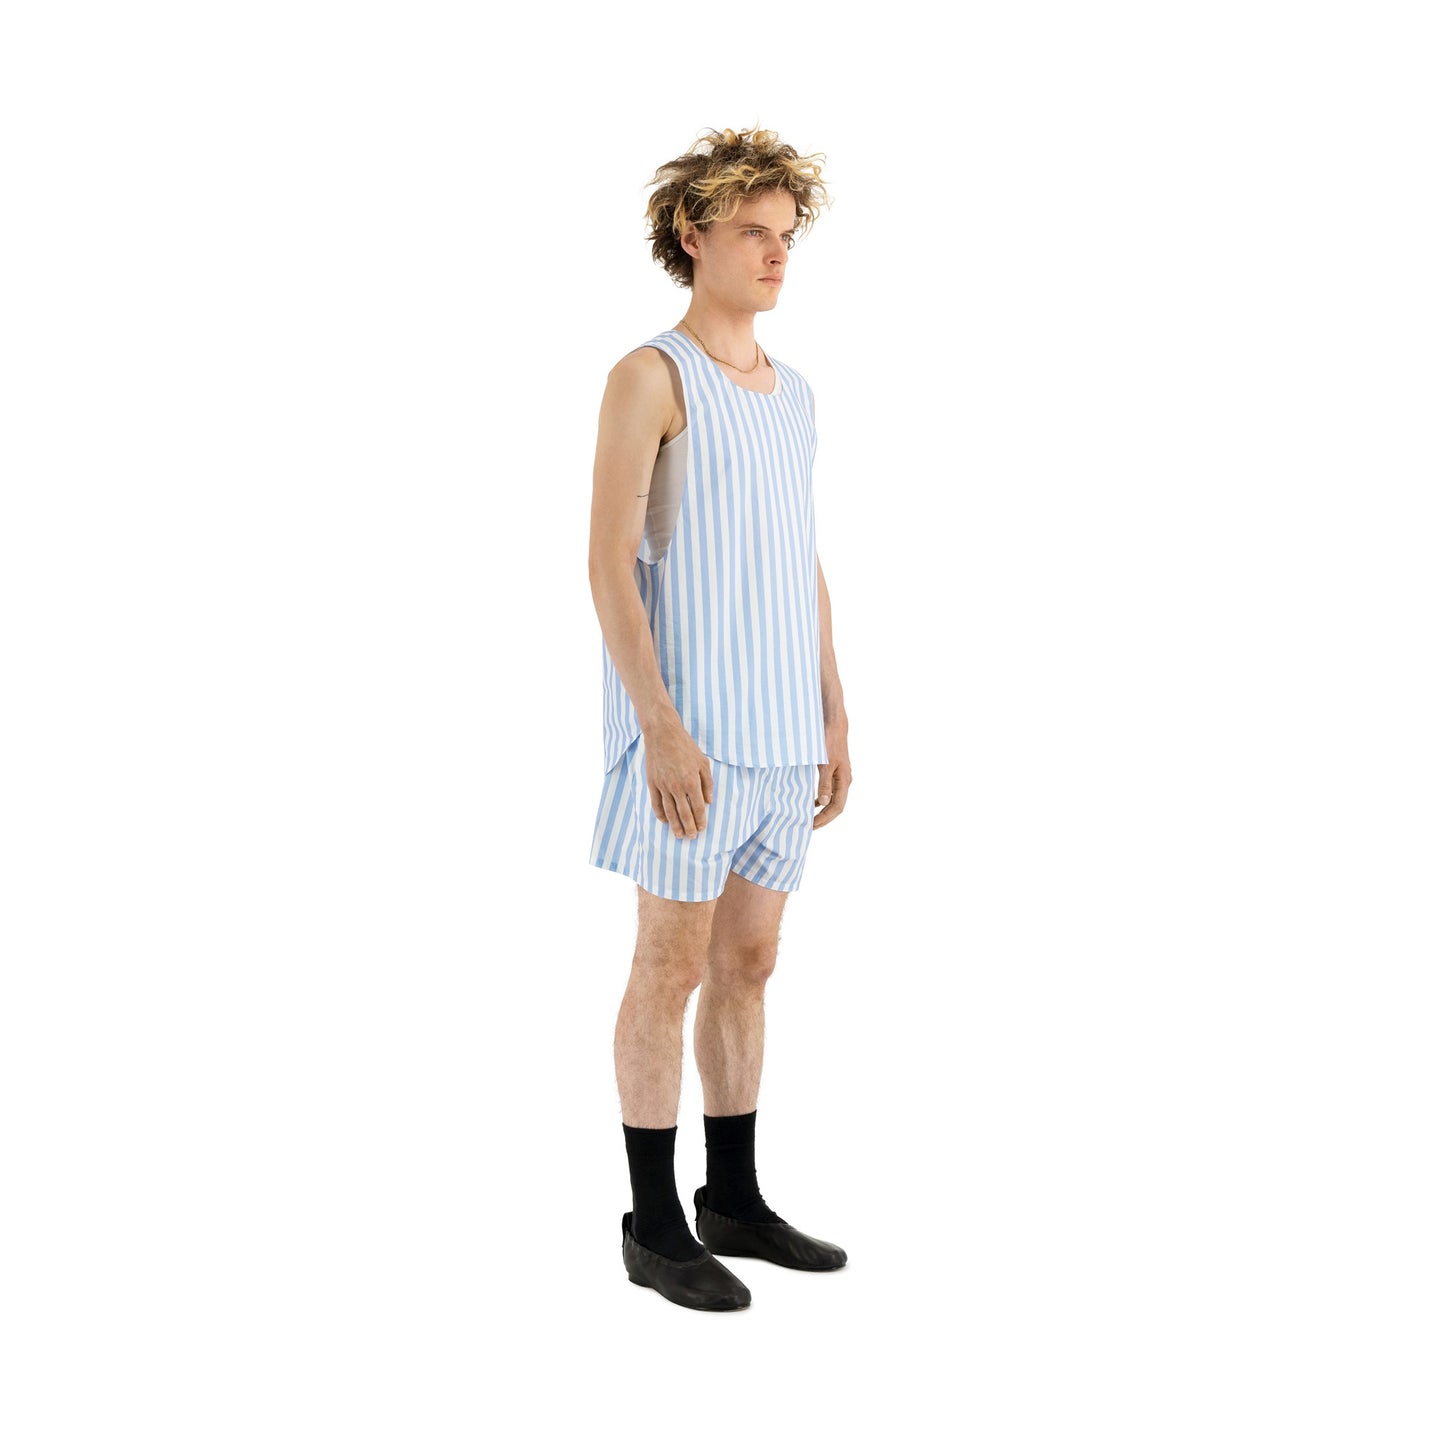 Henry Short Shorts Light Blue Stripe